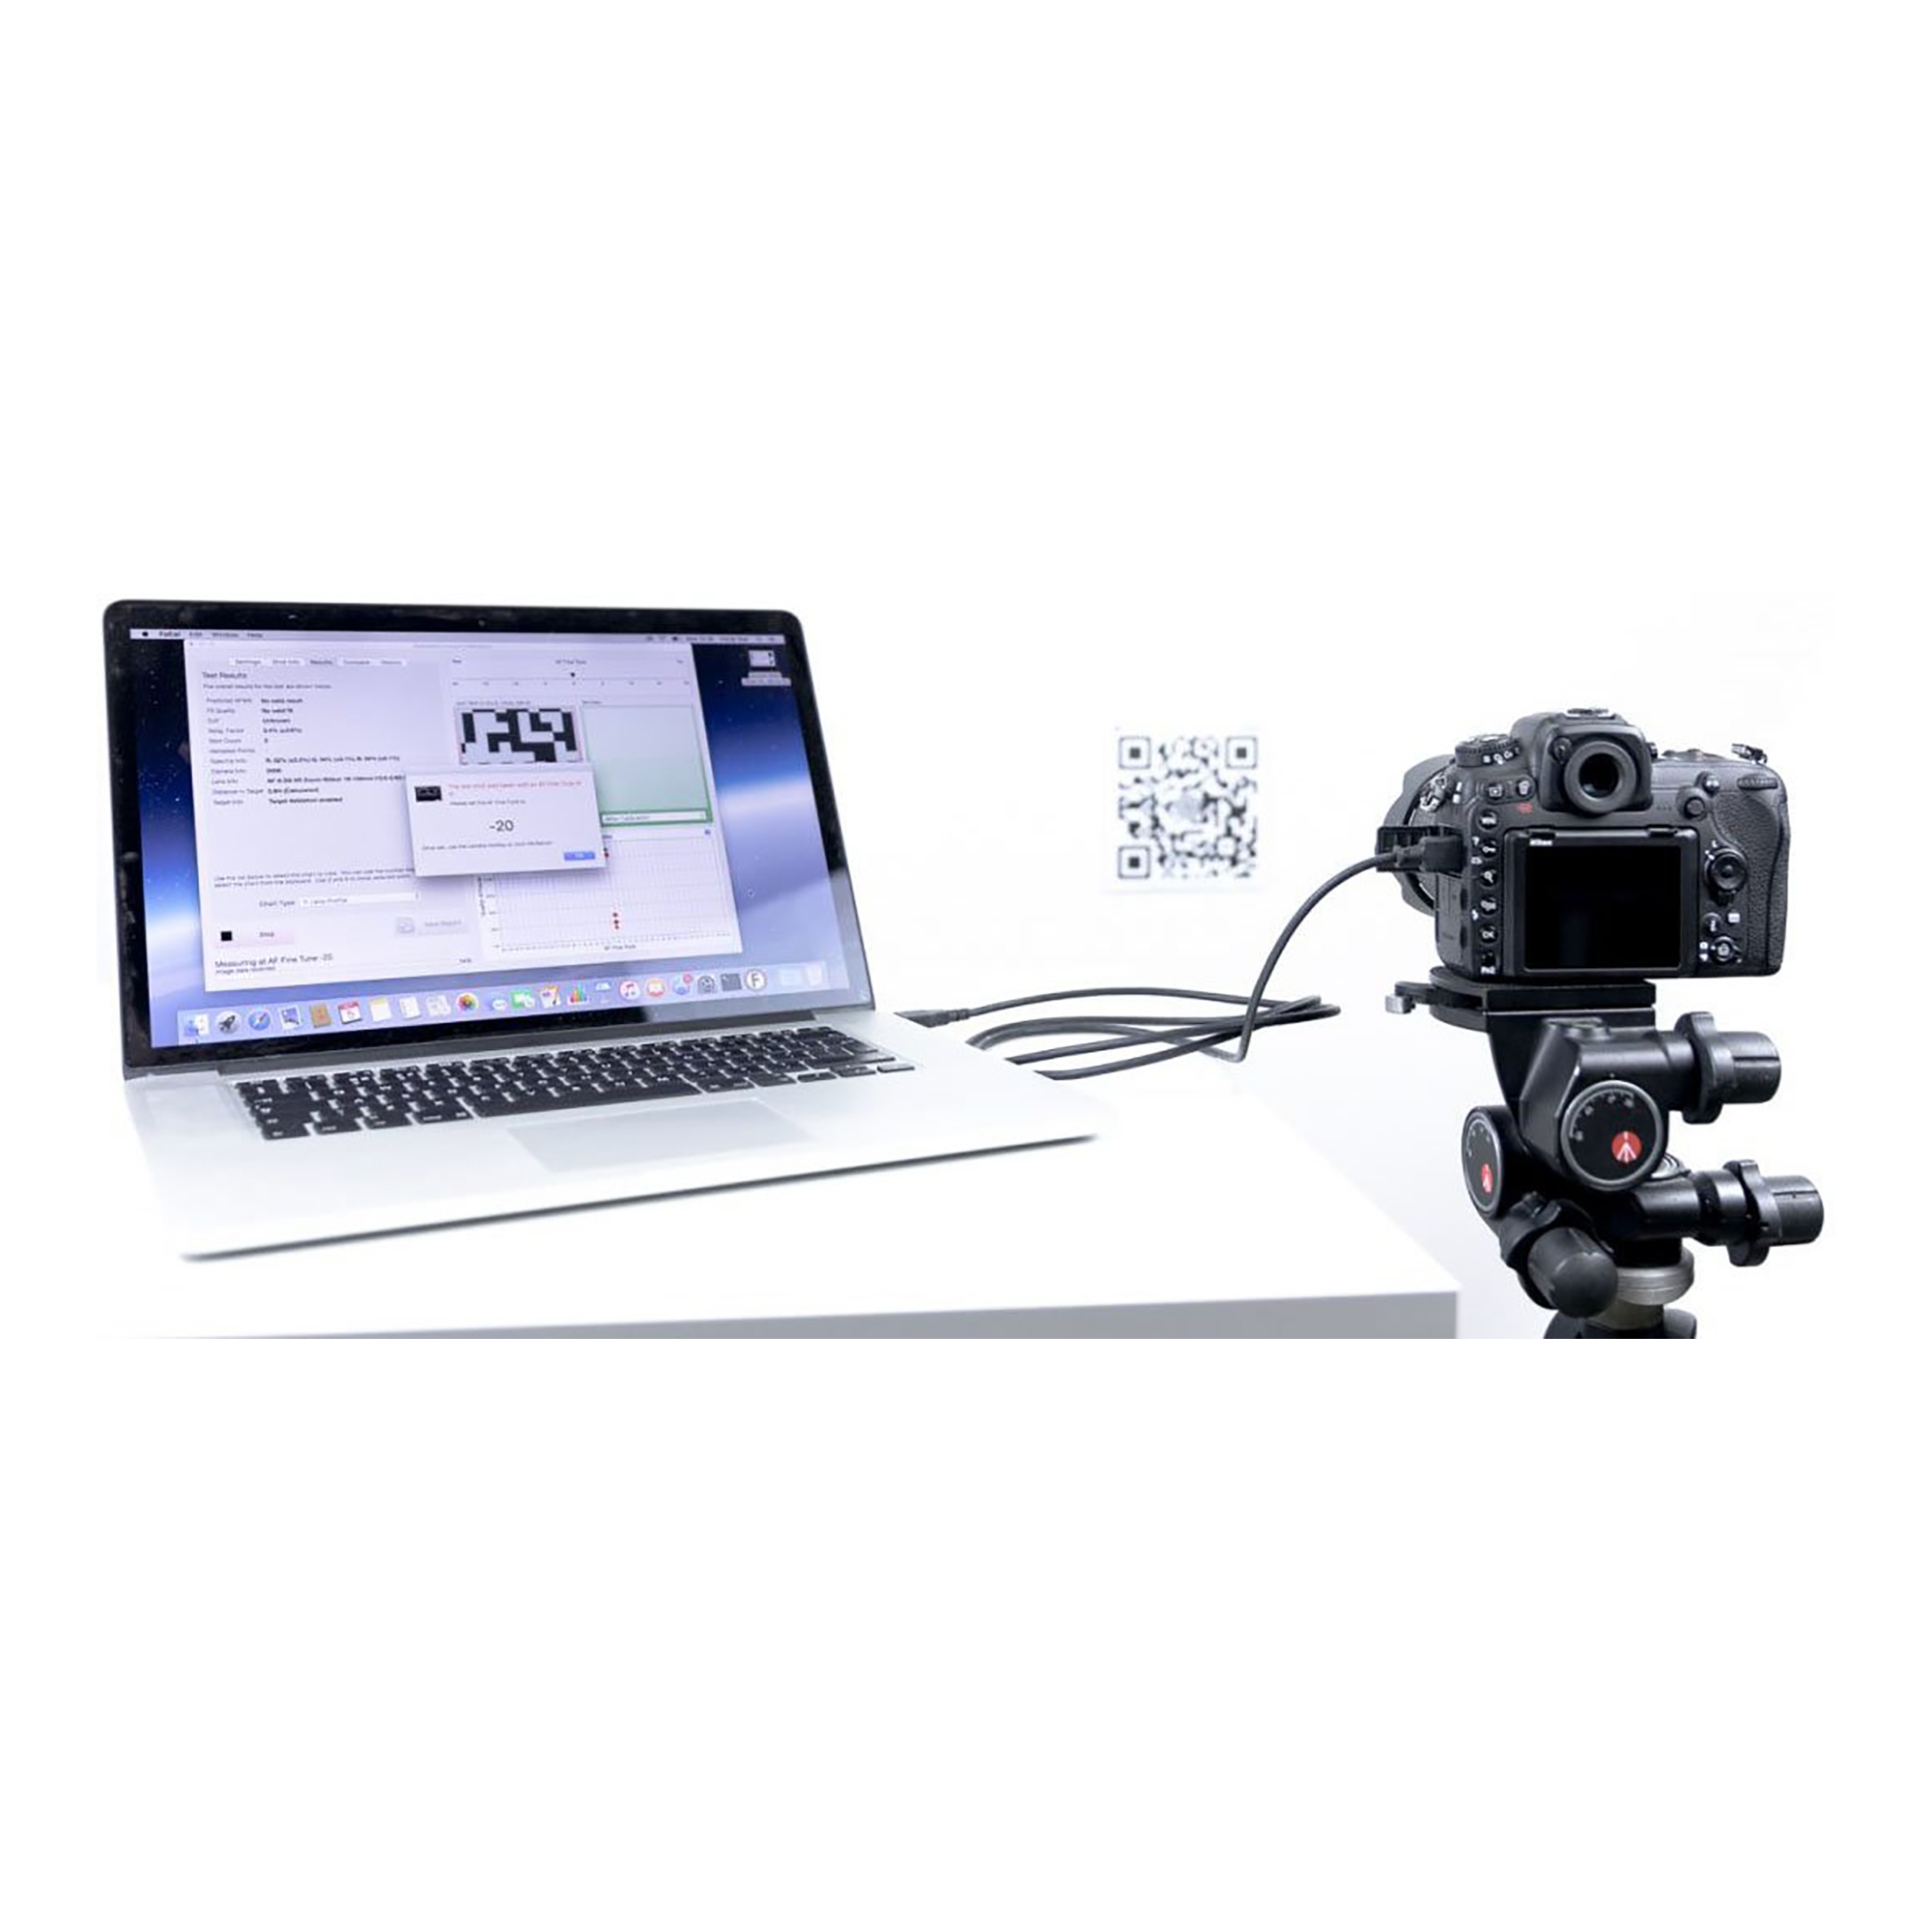 (81) reikan focal pro lens calibration